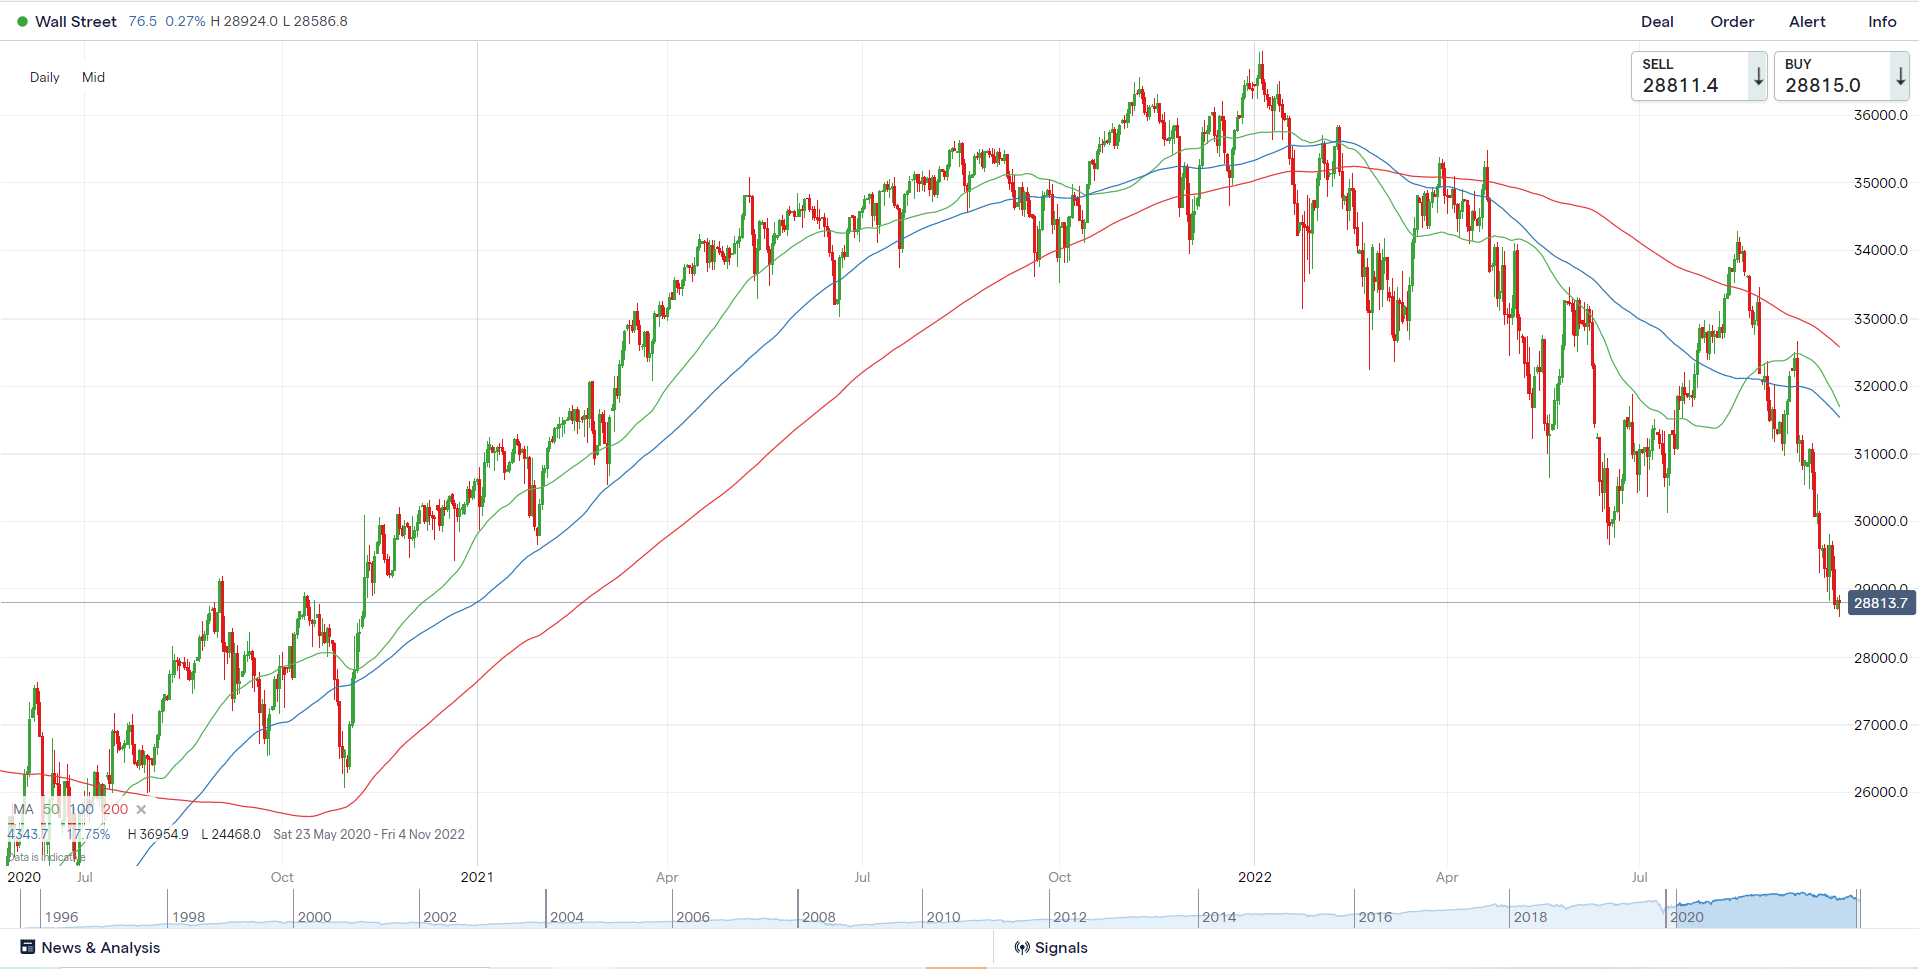 MA200 indicator on the Dow Jones Index chart